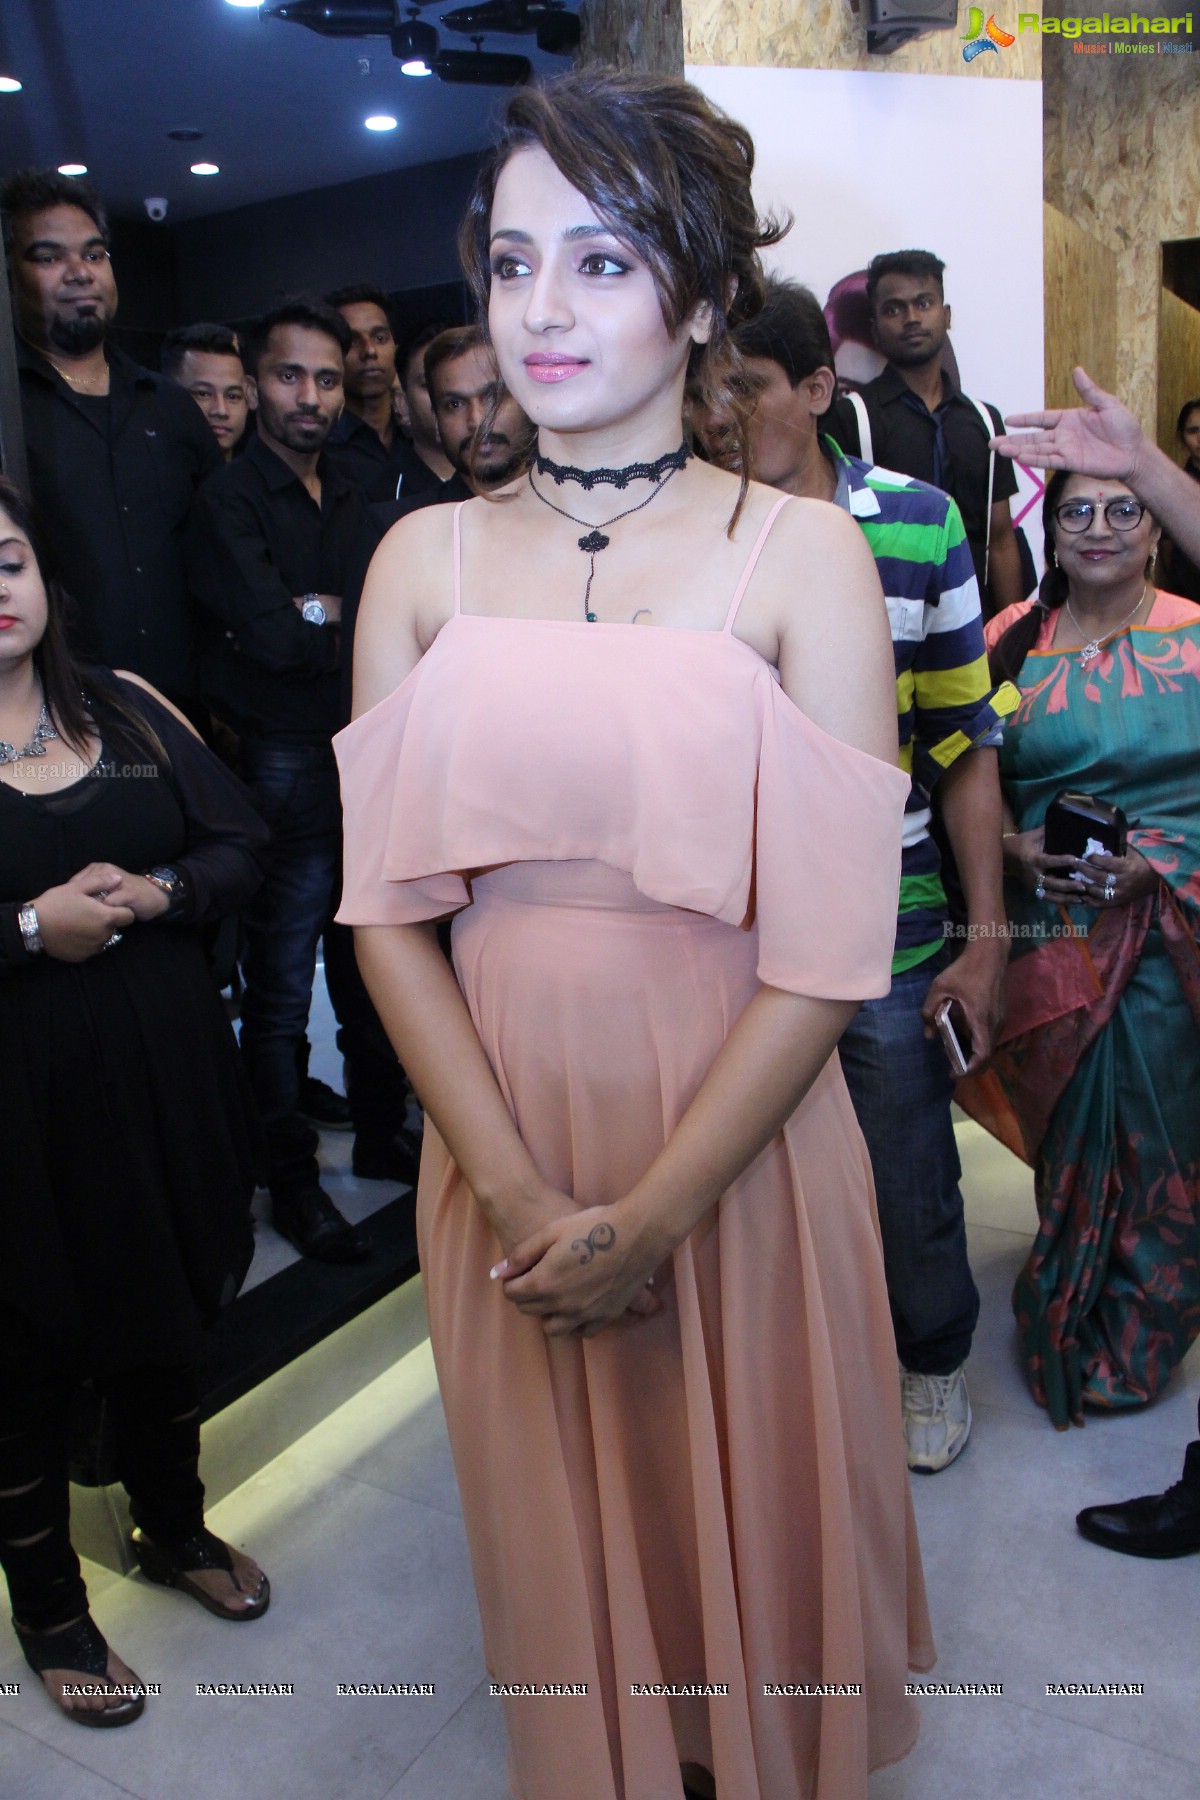 Trisha launches Spalon India's 2nd Bounce Salon and Spa at Inorbit Mall, Hyderabad